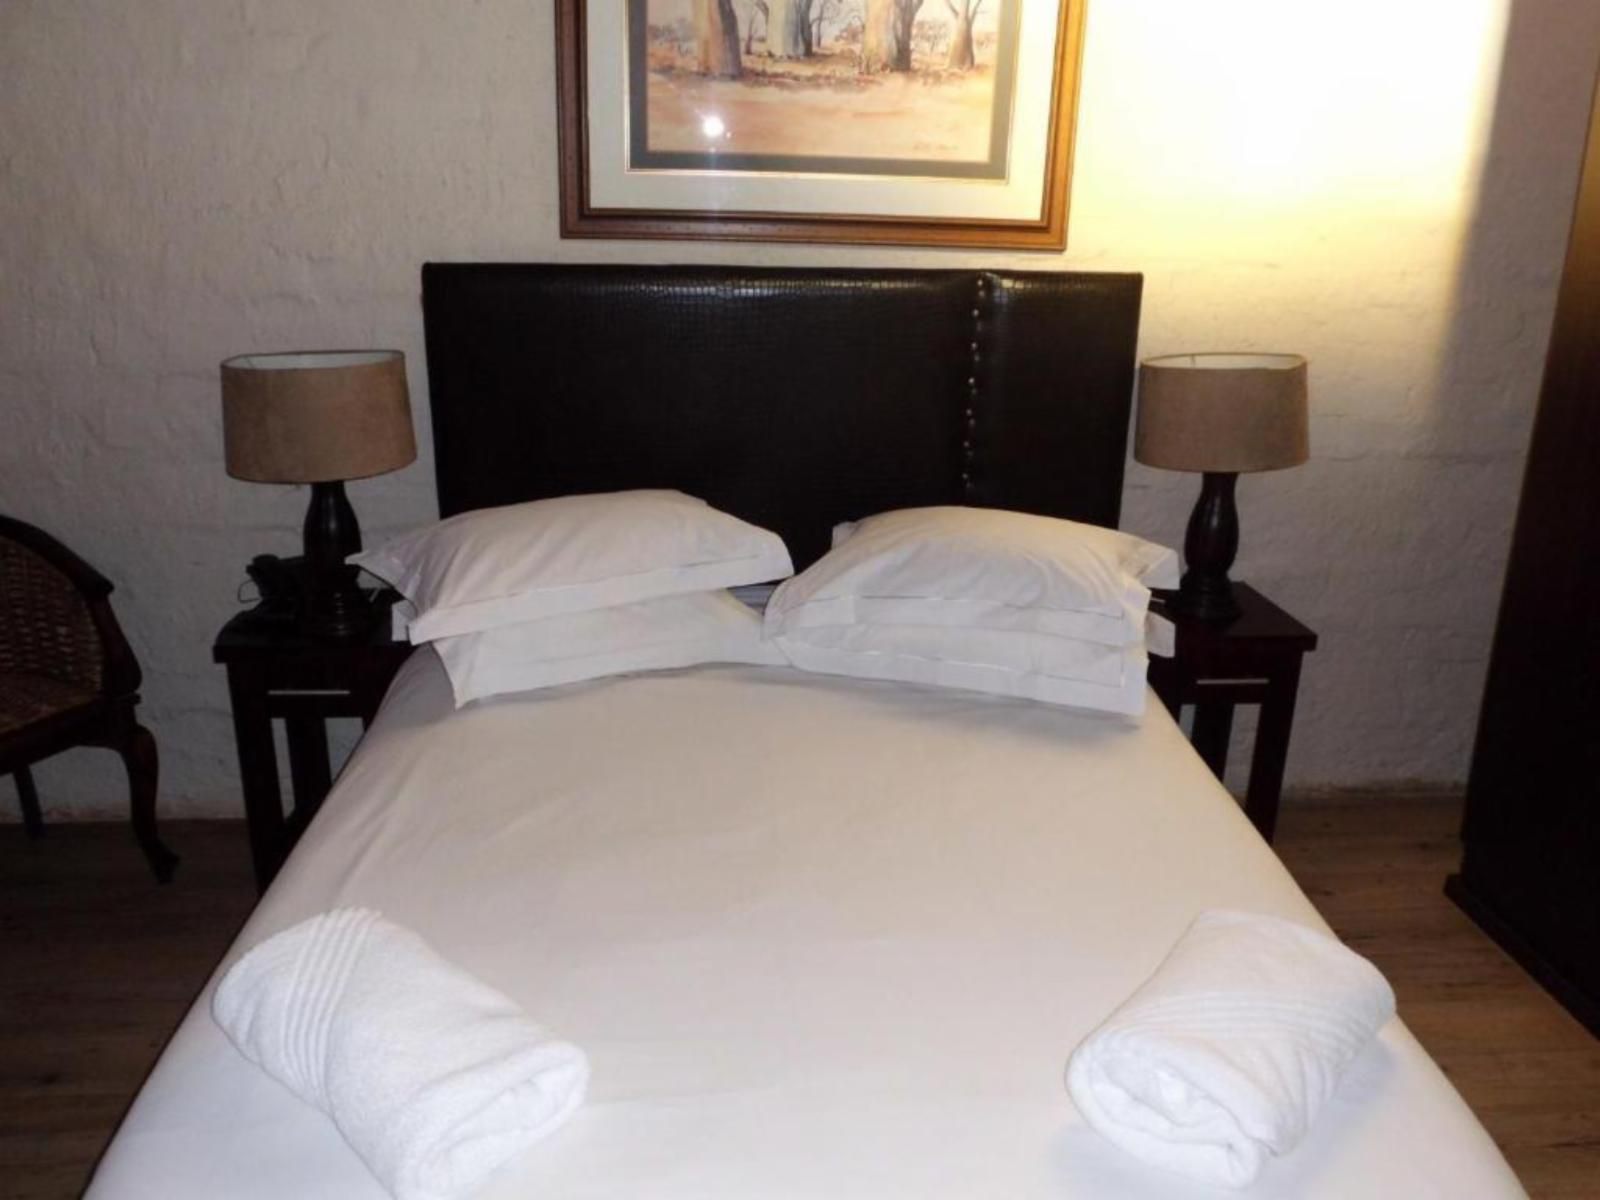 Bains Lodge Langenhoven Park Bloemfontein Free State South Africa Bedroom